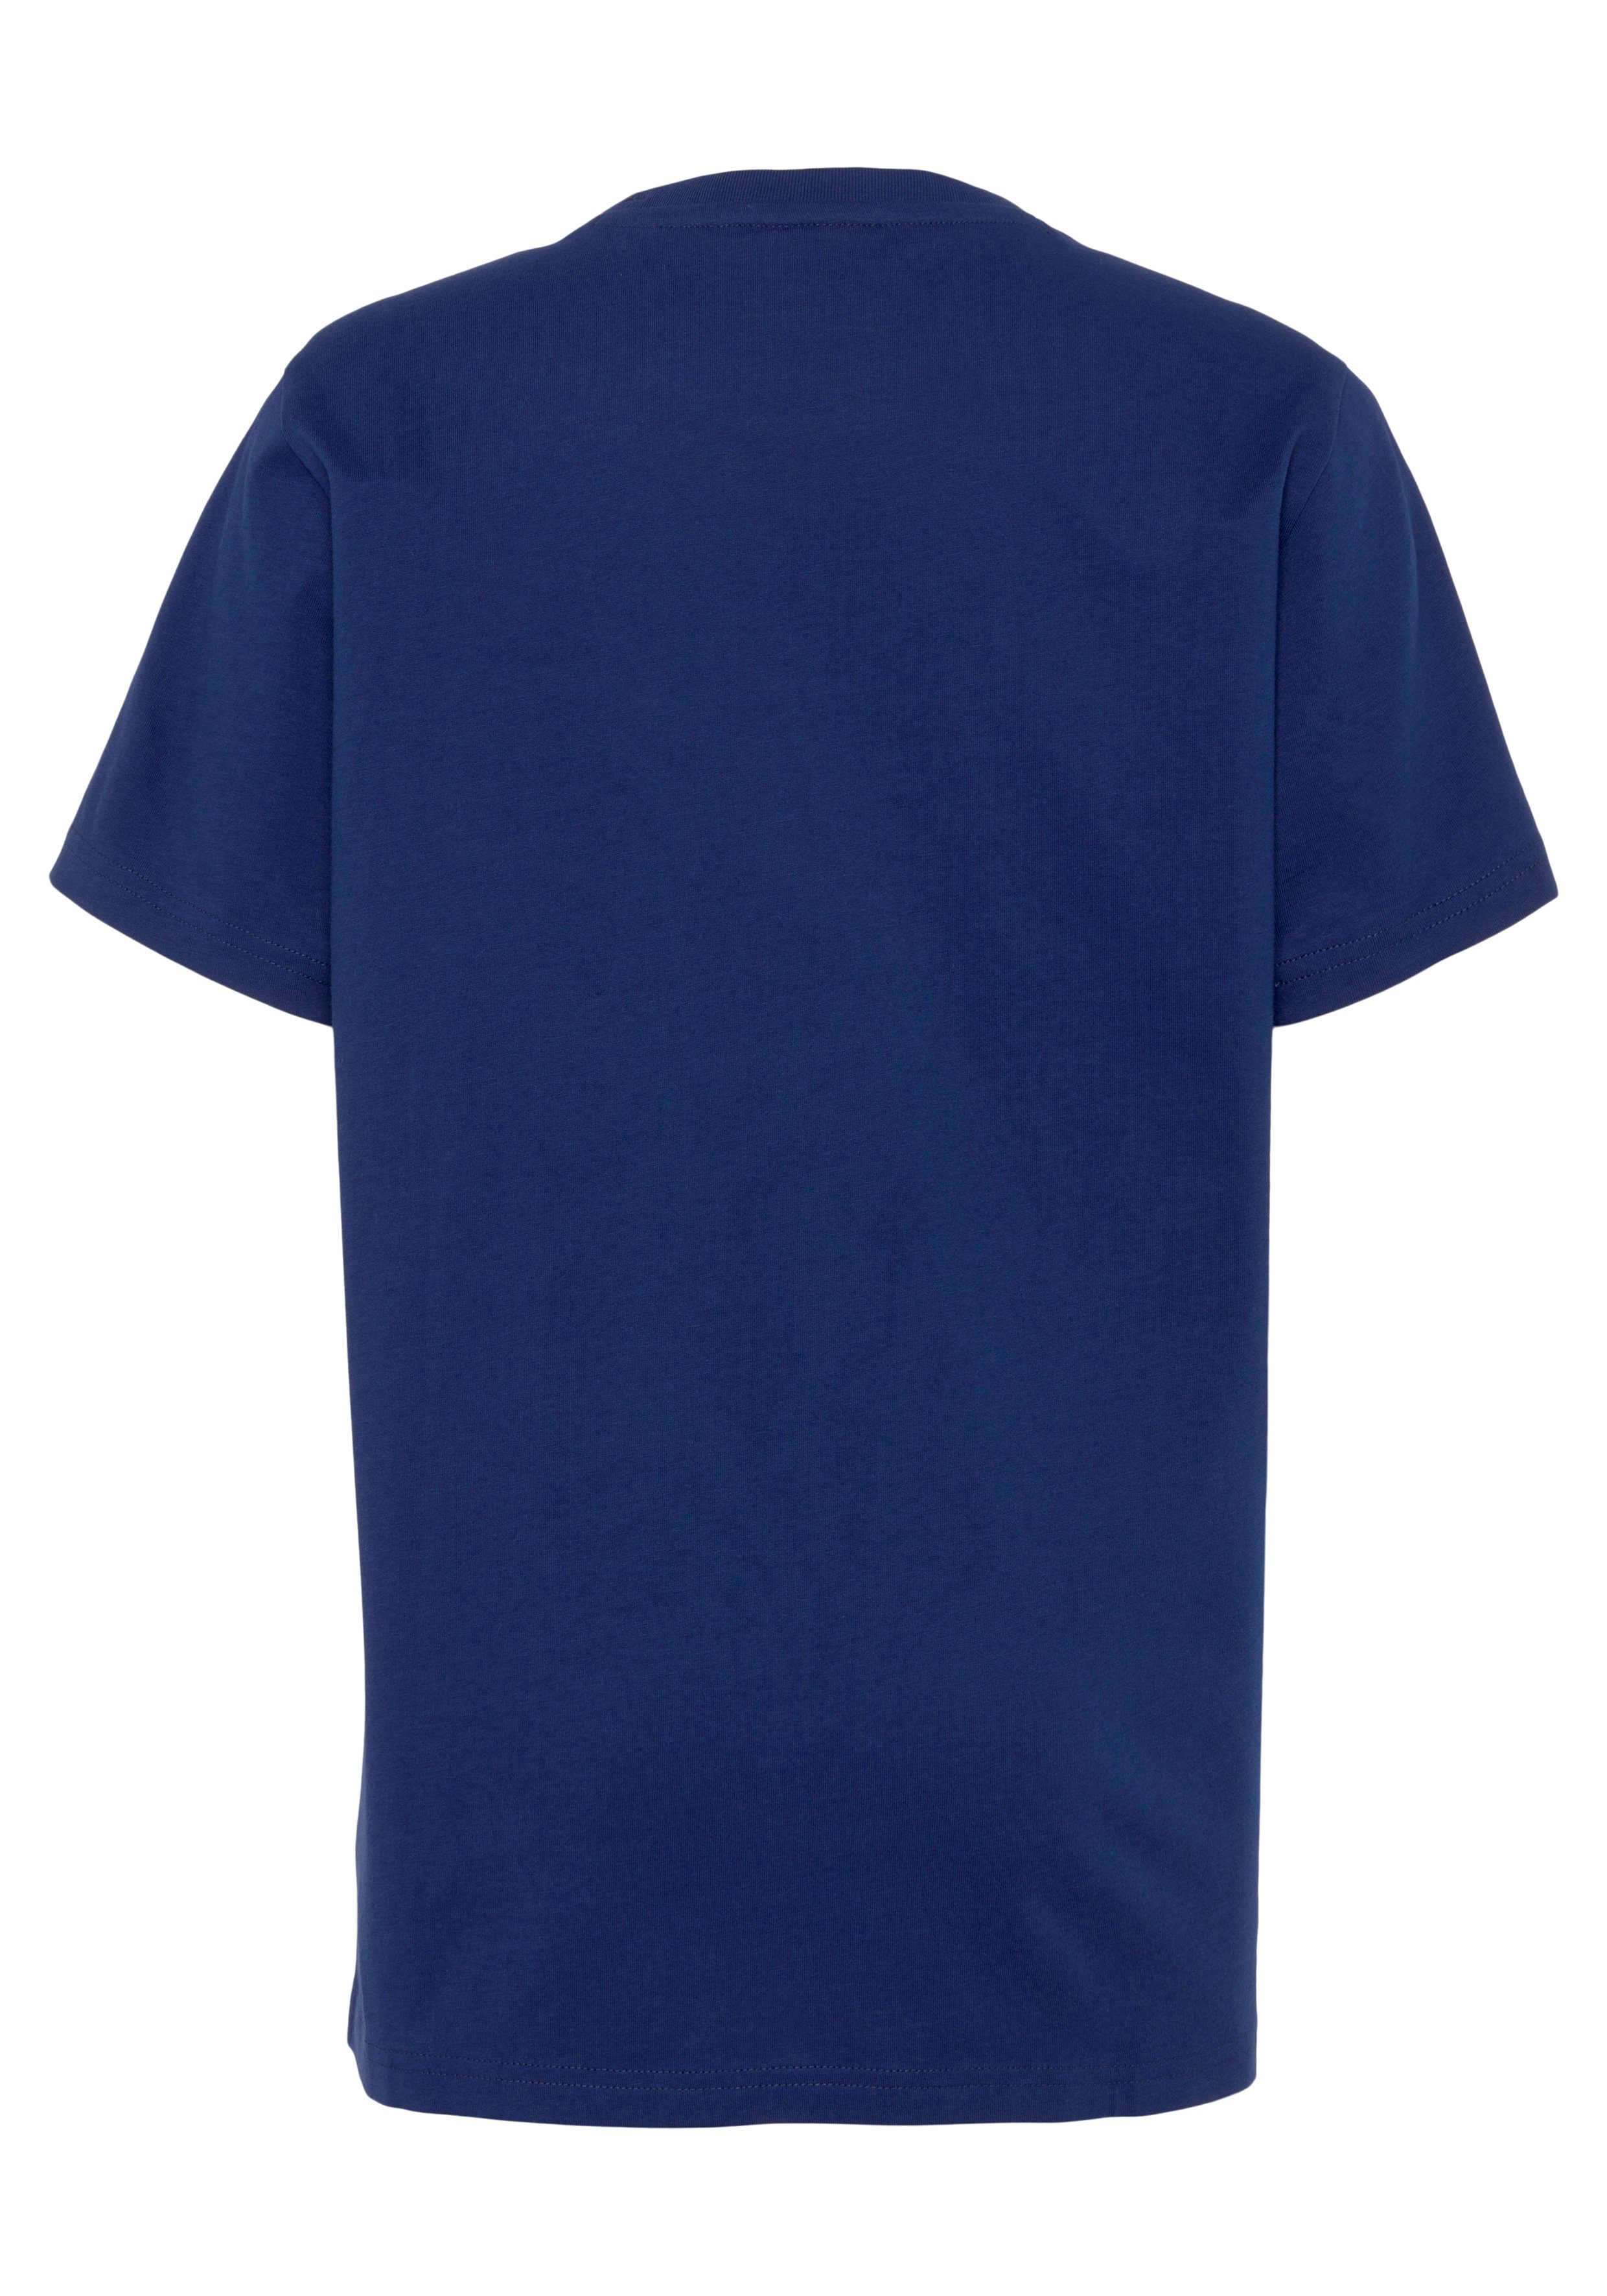 Champion T-Shirt blau Classic Crewneck Kinder large T-Shirt - Logo für